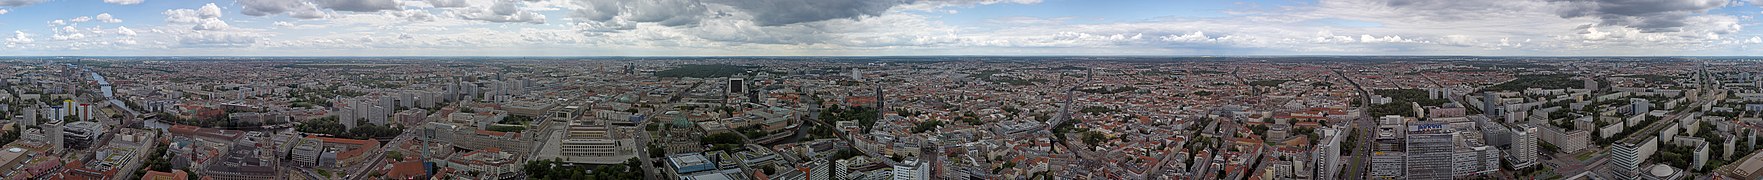 Berlin-Panorama vom Fernsehturm.jpg